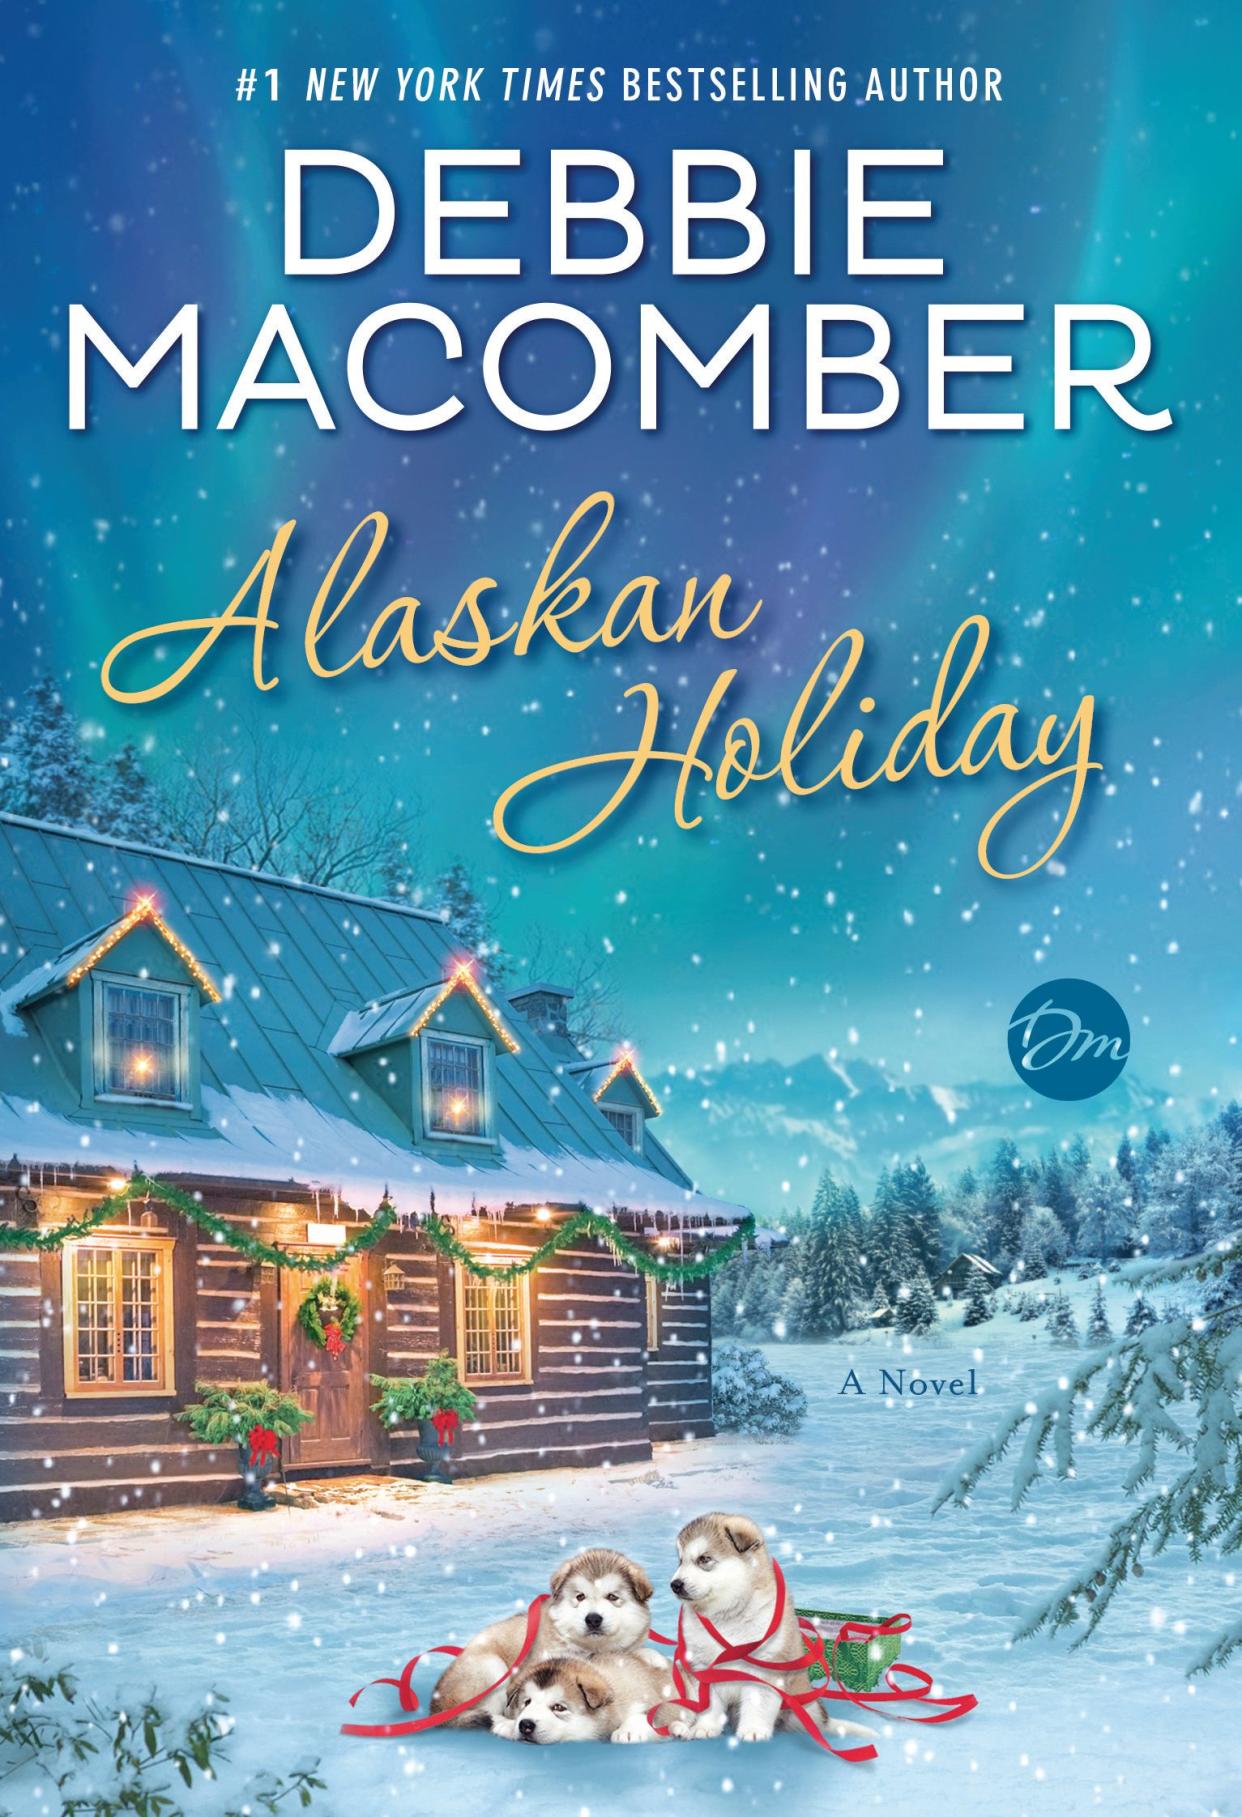 "Alaskan Holiday" by Debbie Macomber